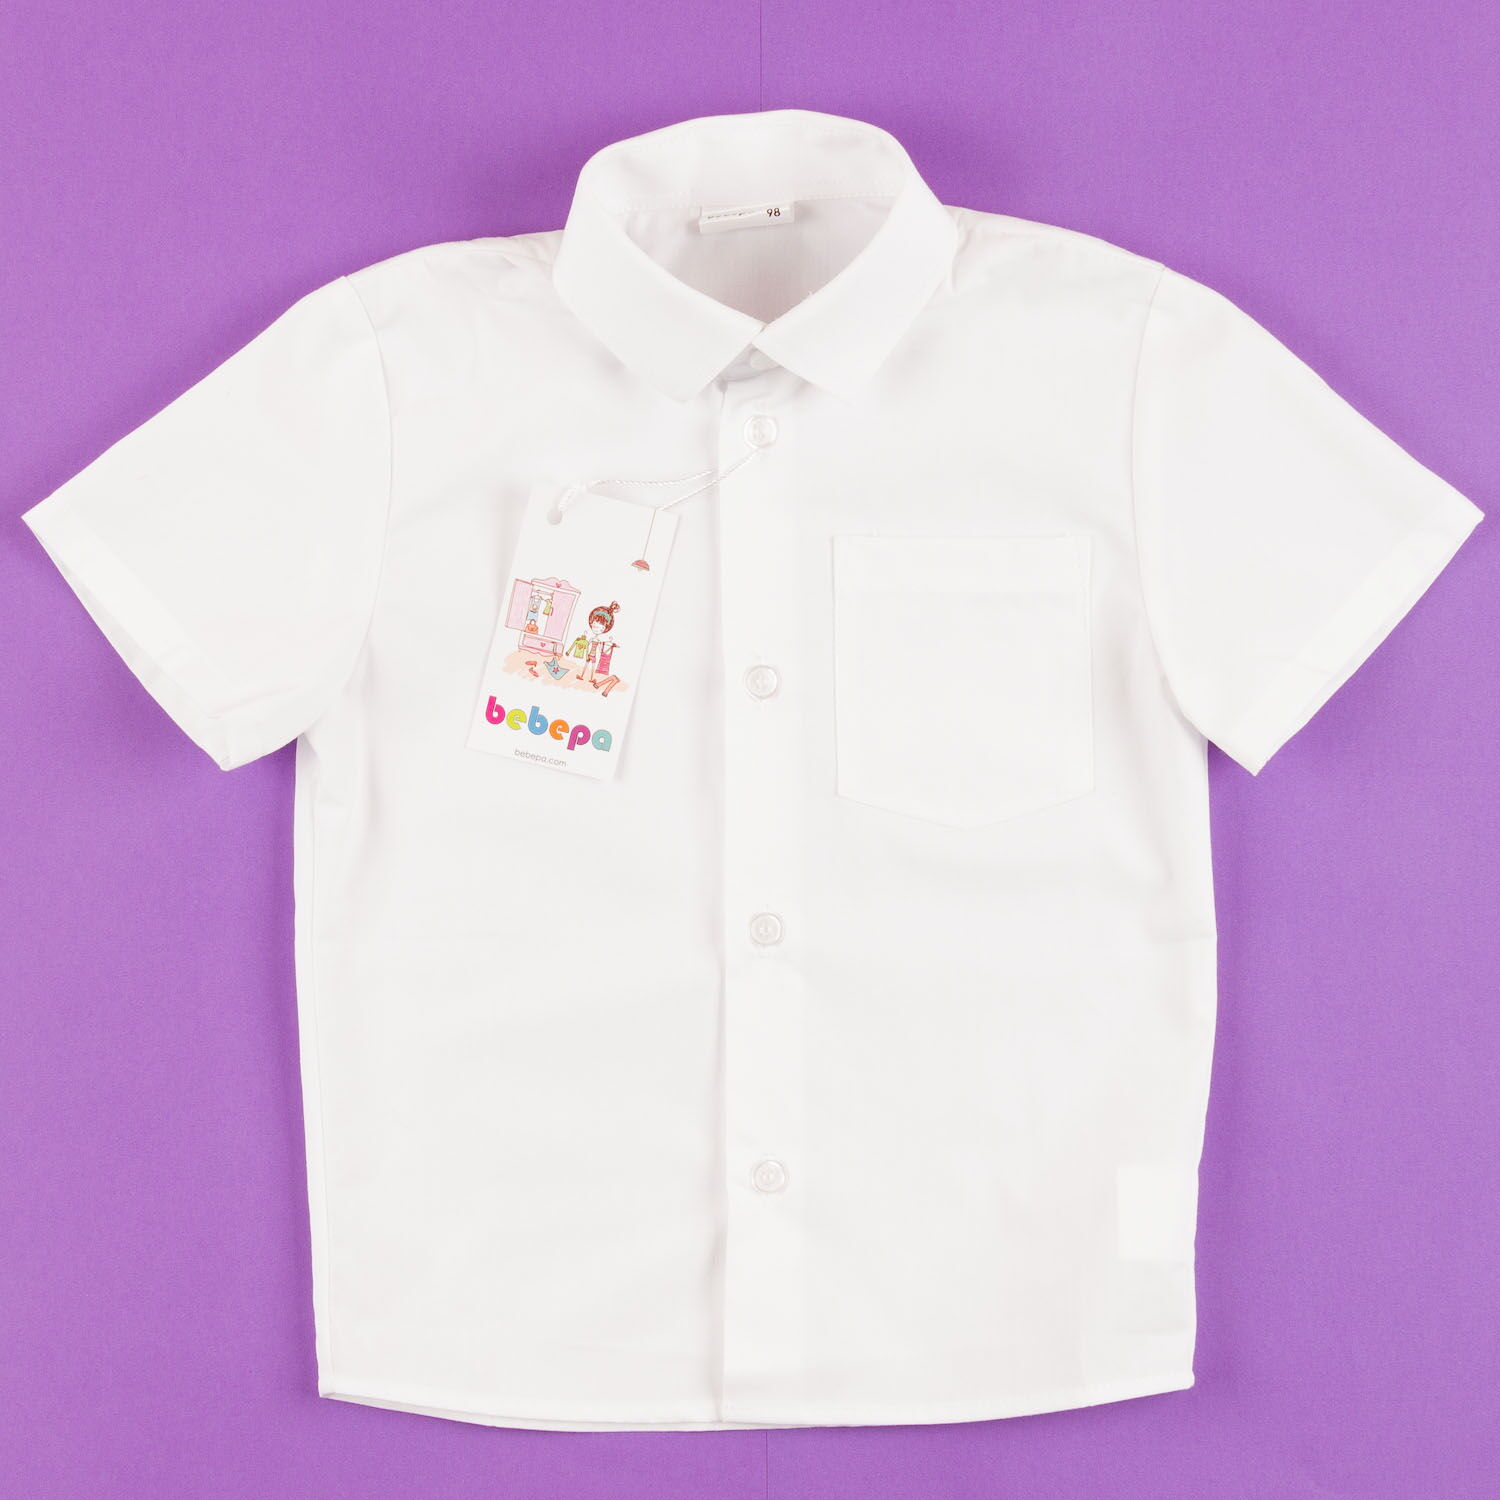 Рубашка с коротким рукавом для мальчика Bebepa белая 1105-136 - фото